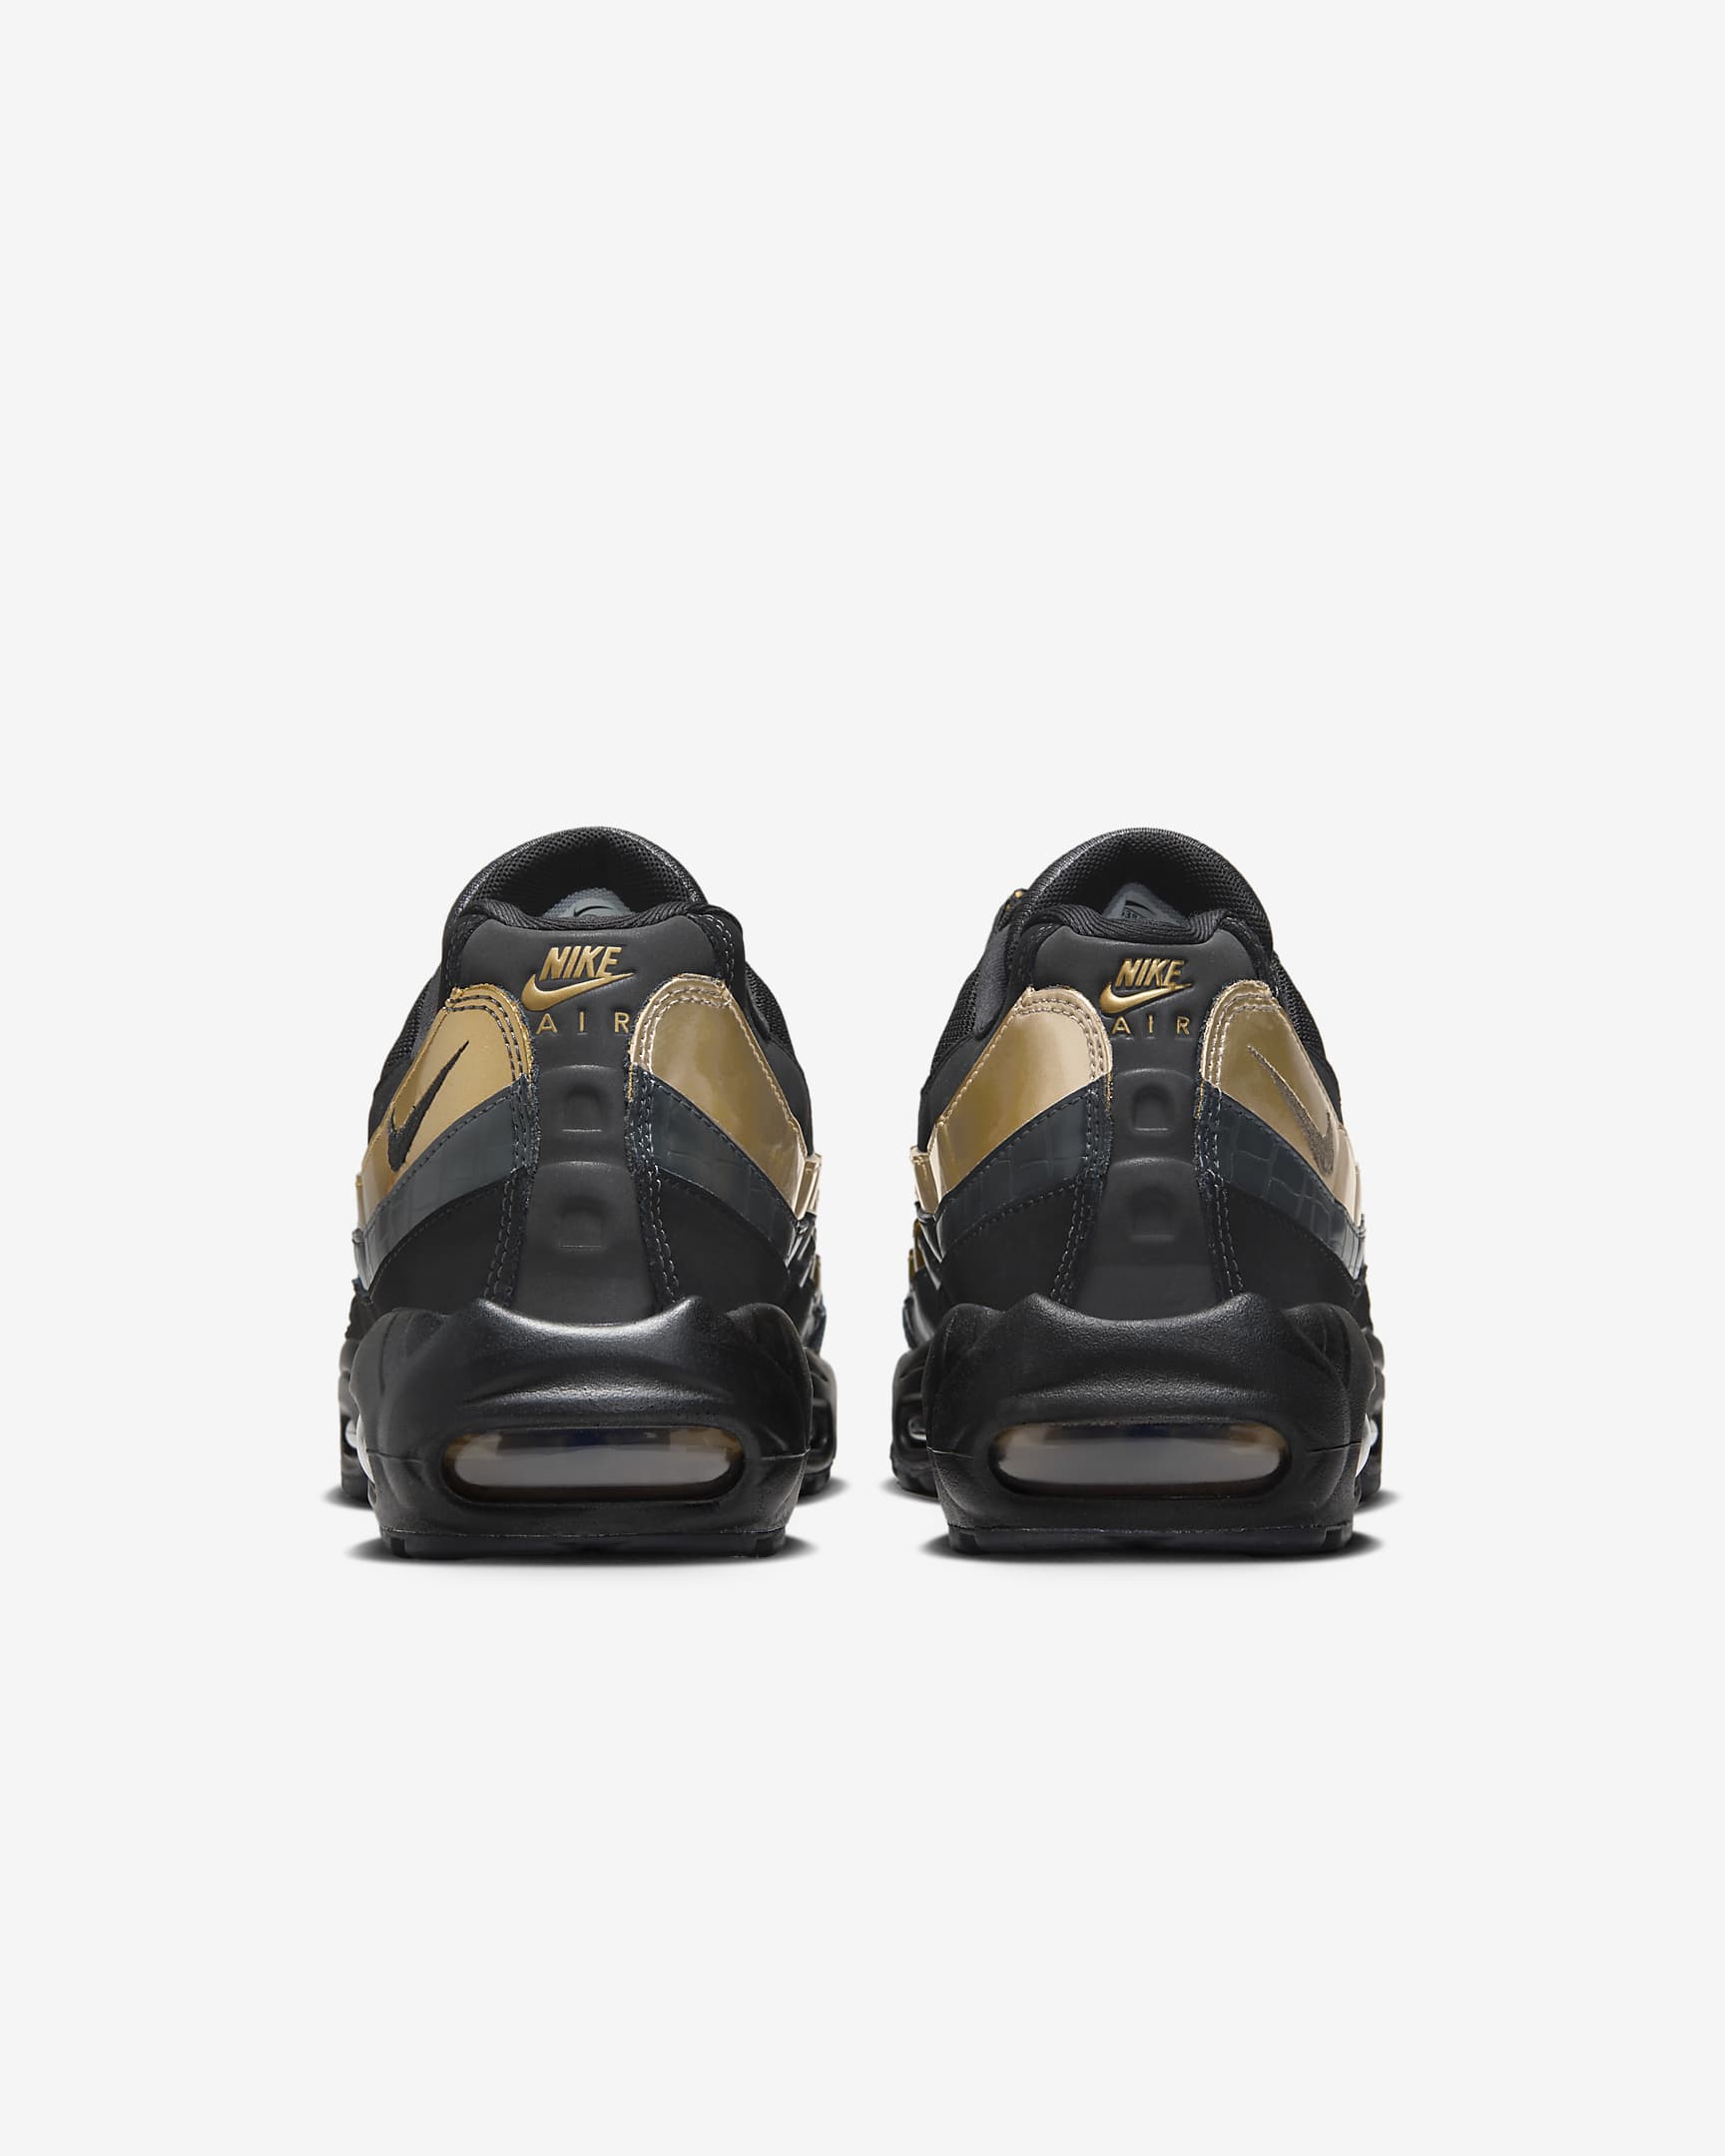 Nike Air Max 95 Premium Men's Shoe - Black/Metallic Gold/Anthracite/Black